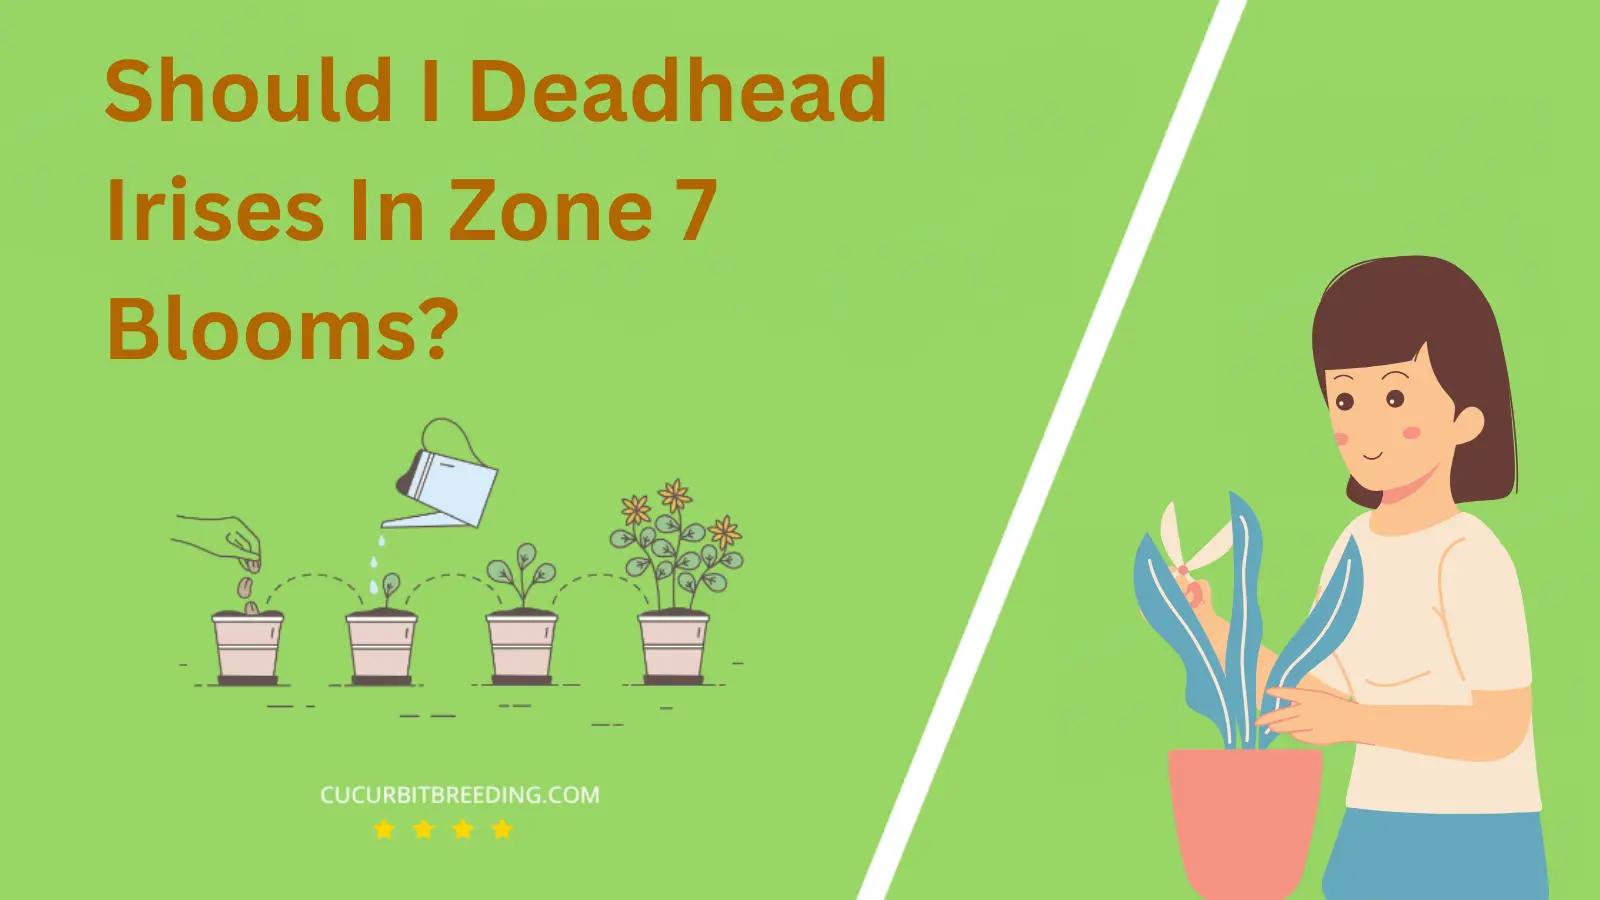 Should I Deadhead Irises In Zone 7 Blooms?